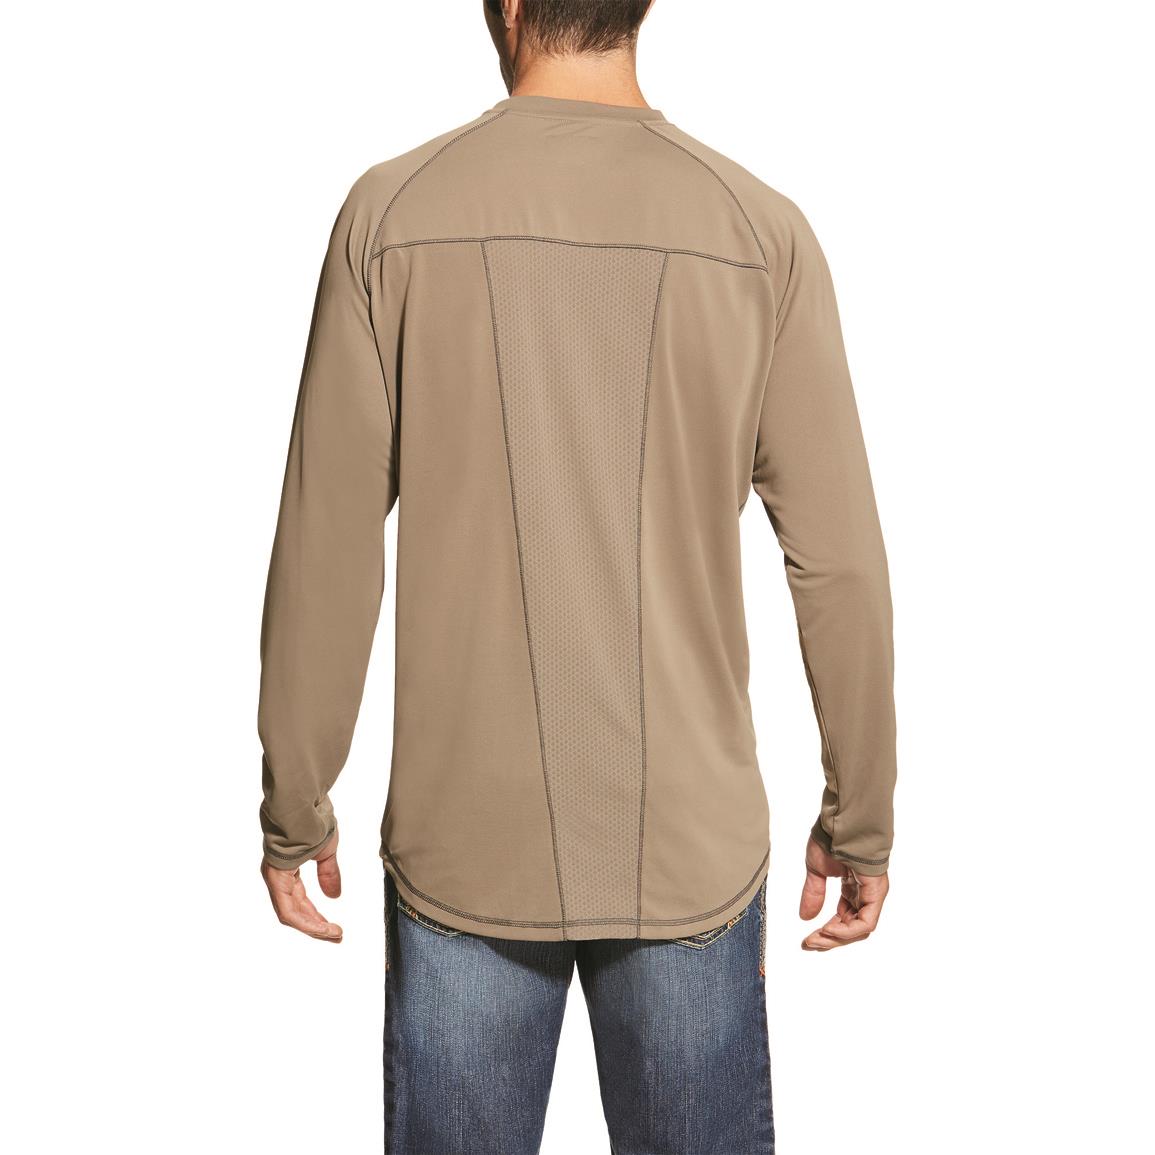 Propper Men's Long-Sleeve Tactical Shirt - 593447, Tactical Clothing at ...